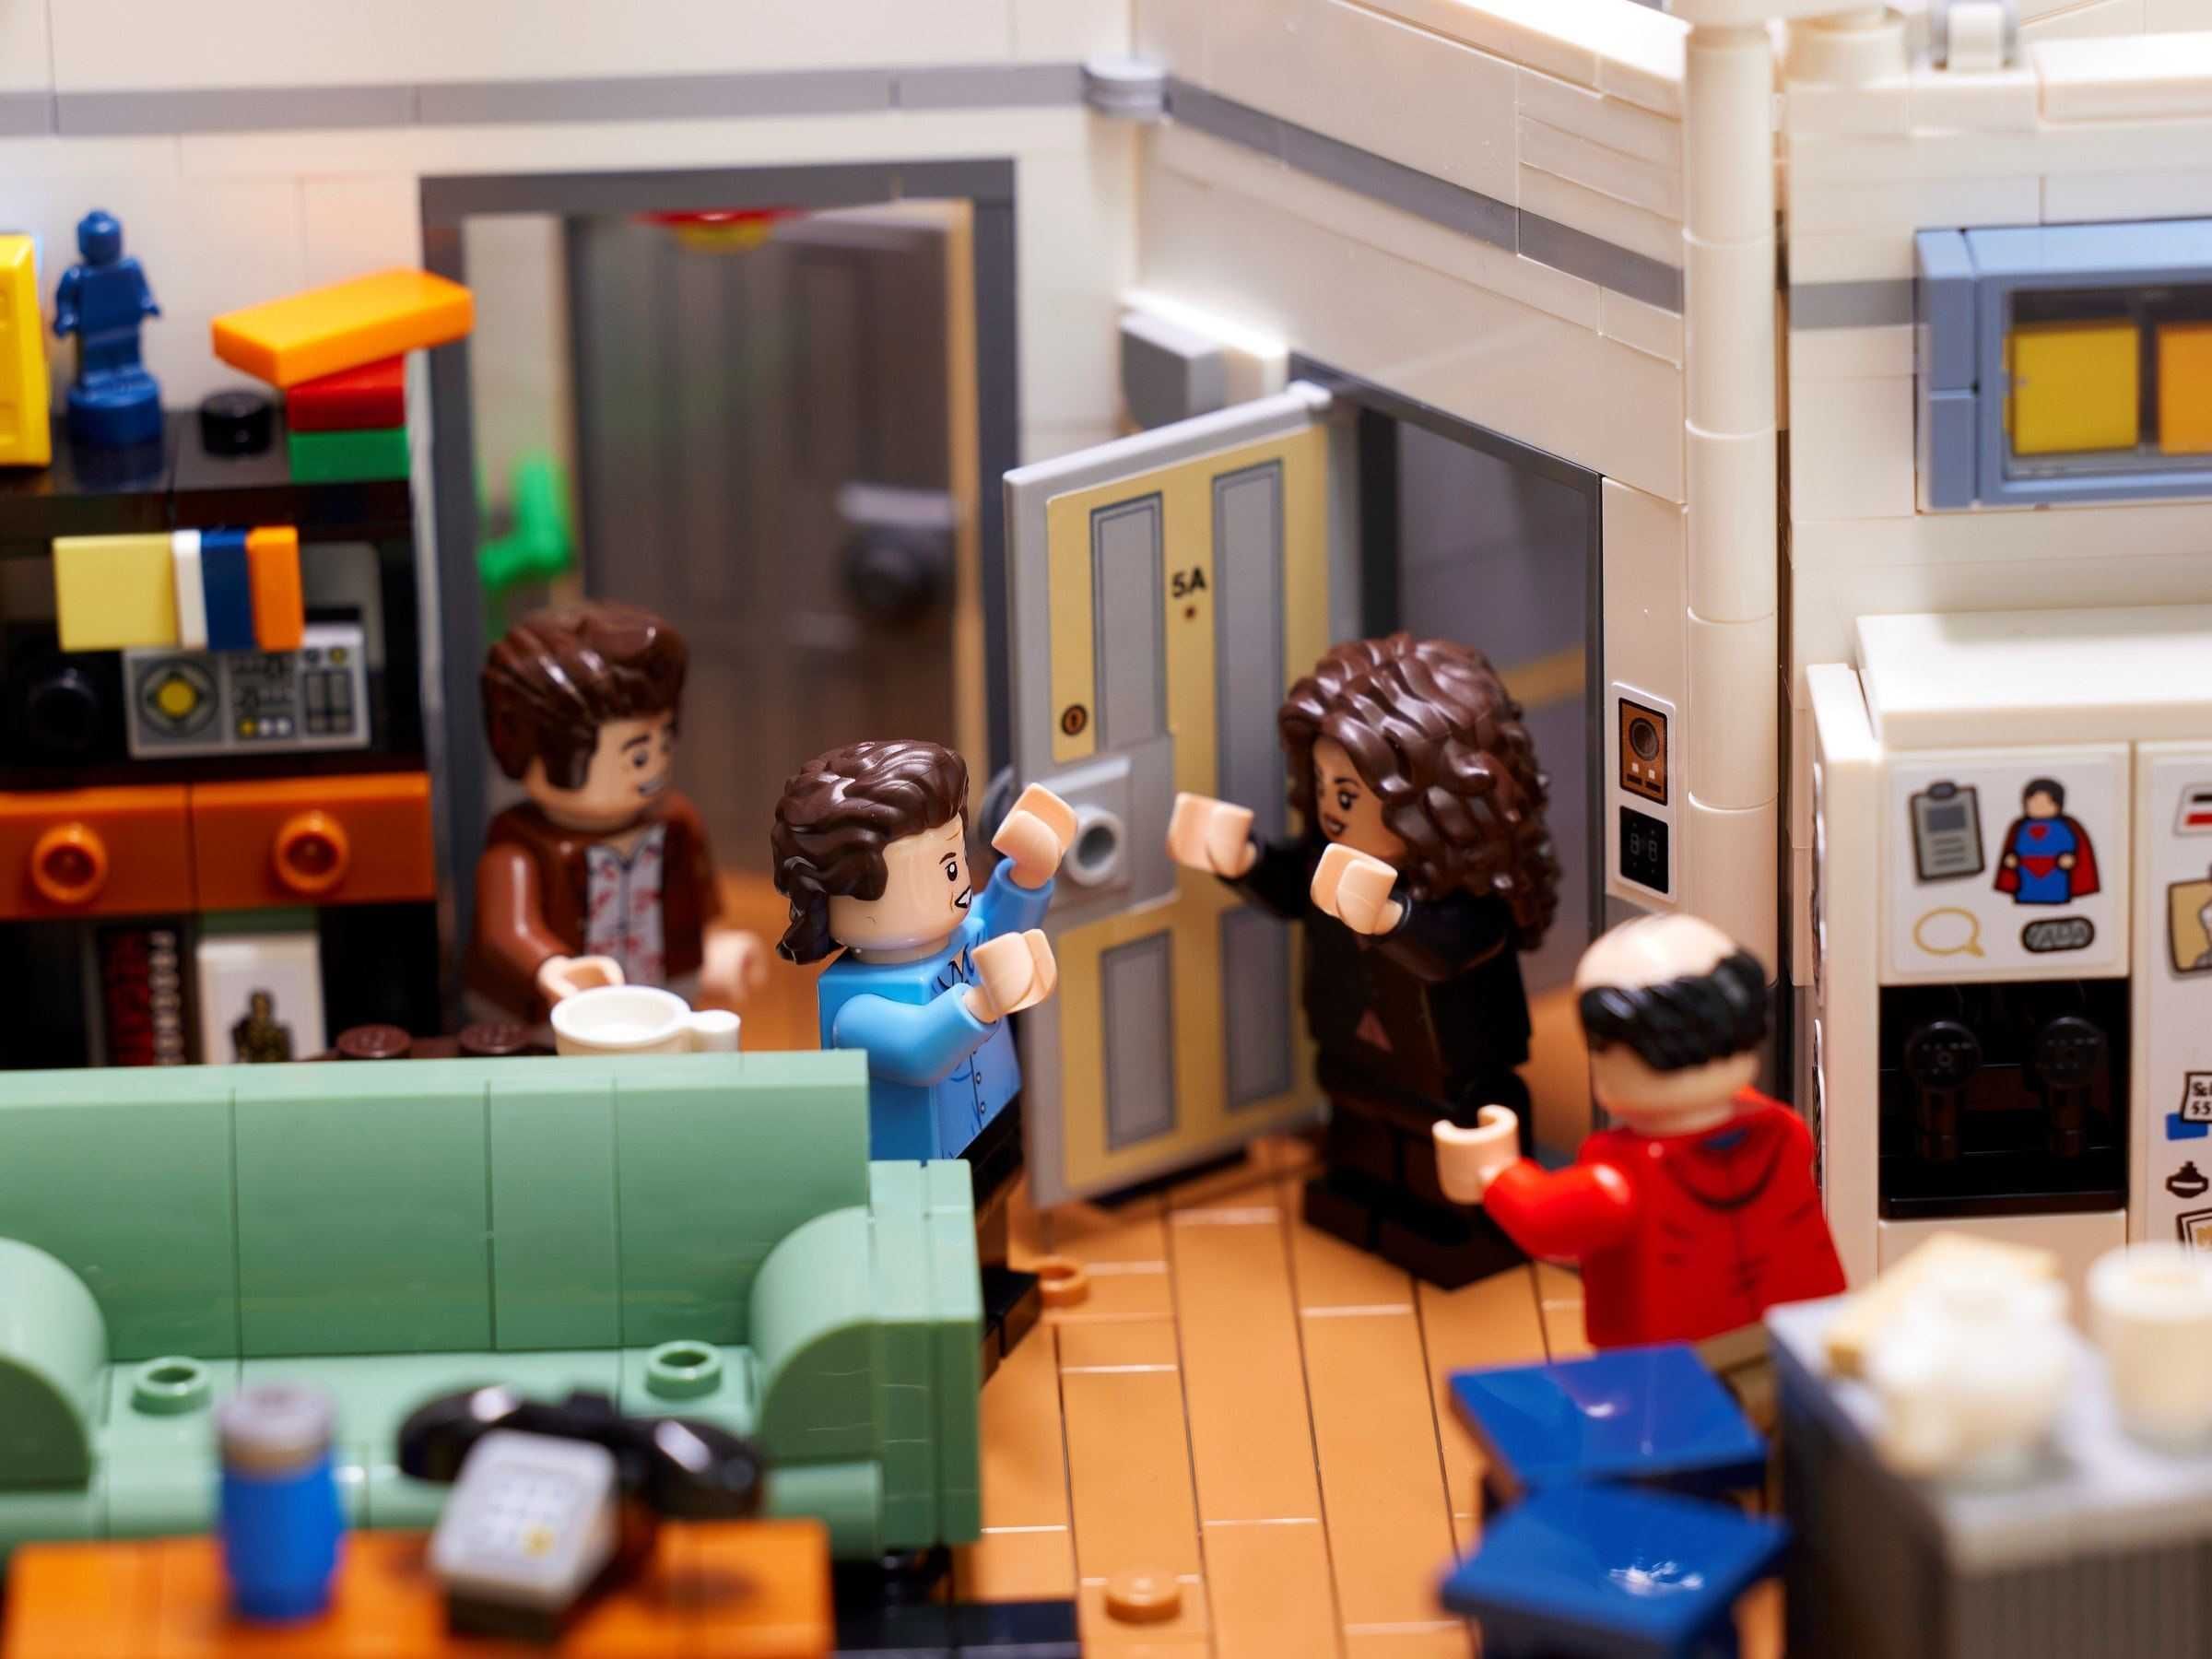 Lego IDEAS 21328 : Seinfeld - NOU, sigilat